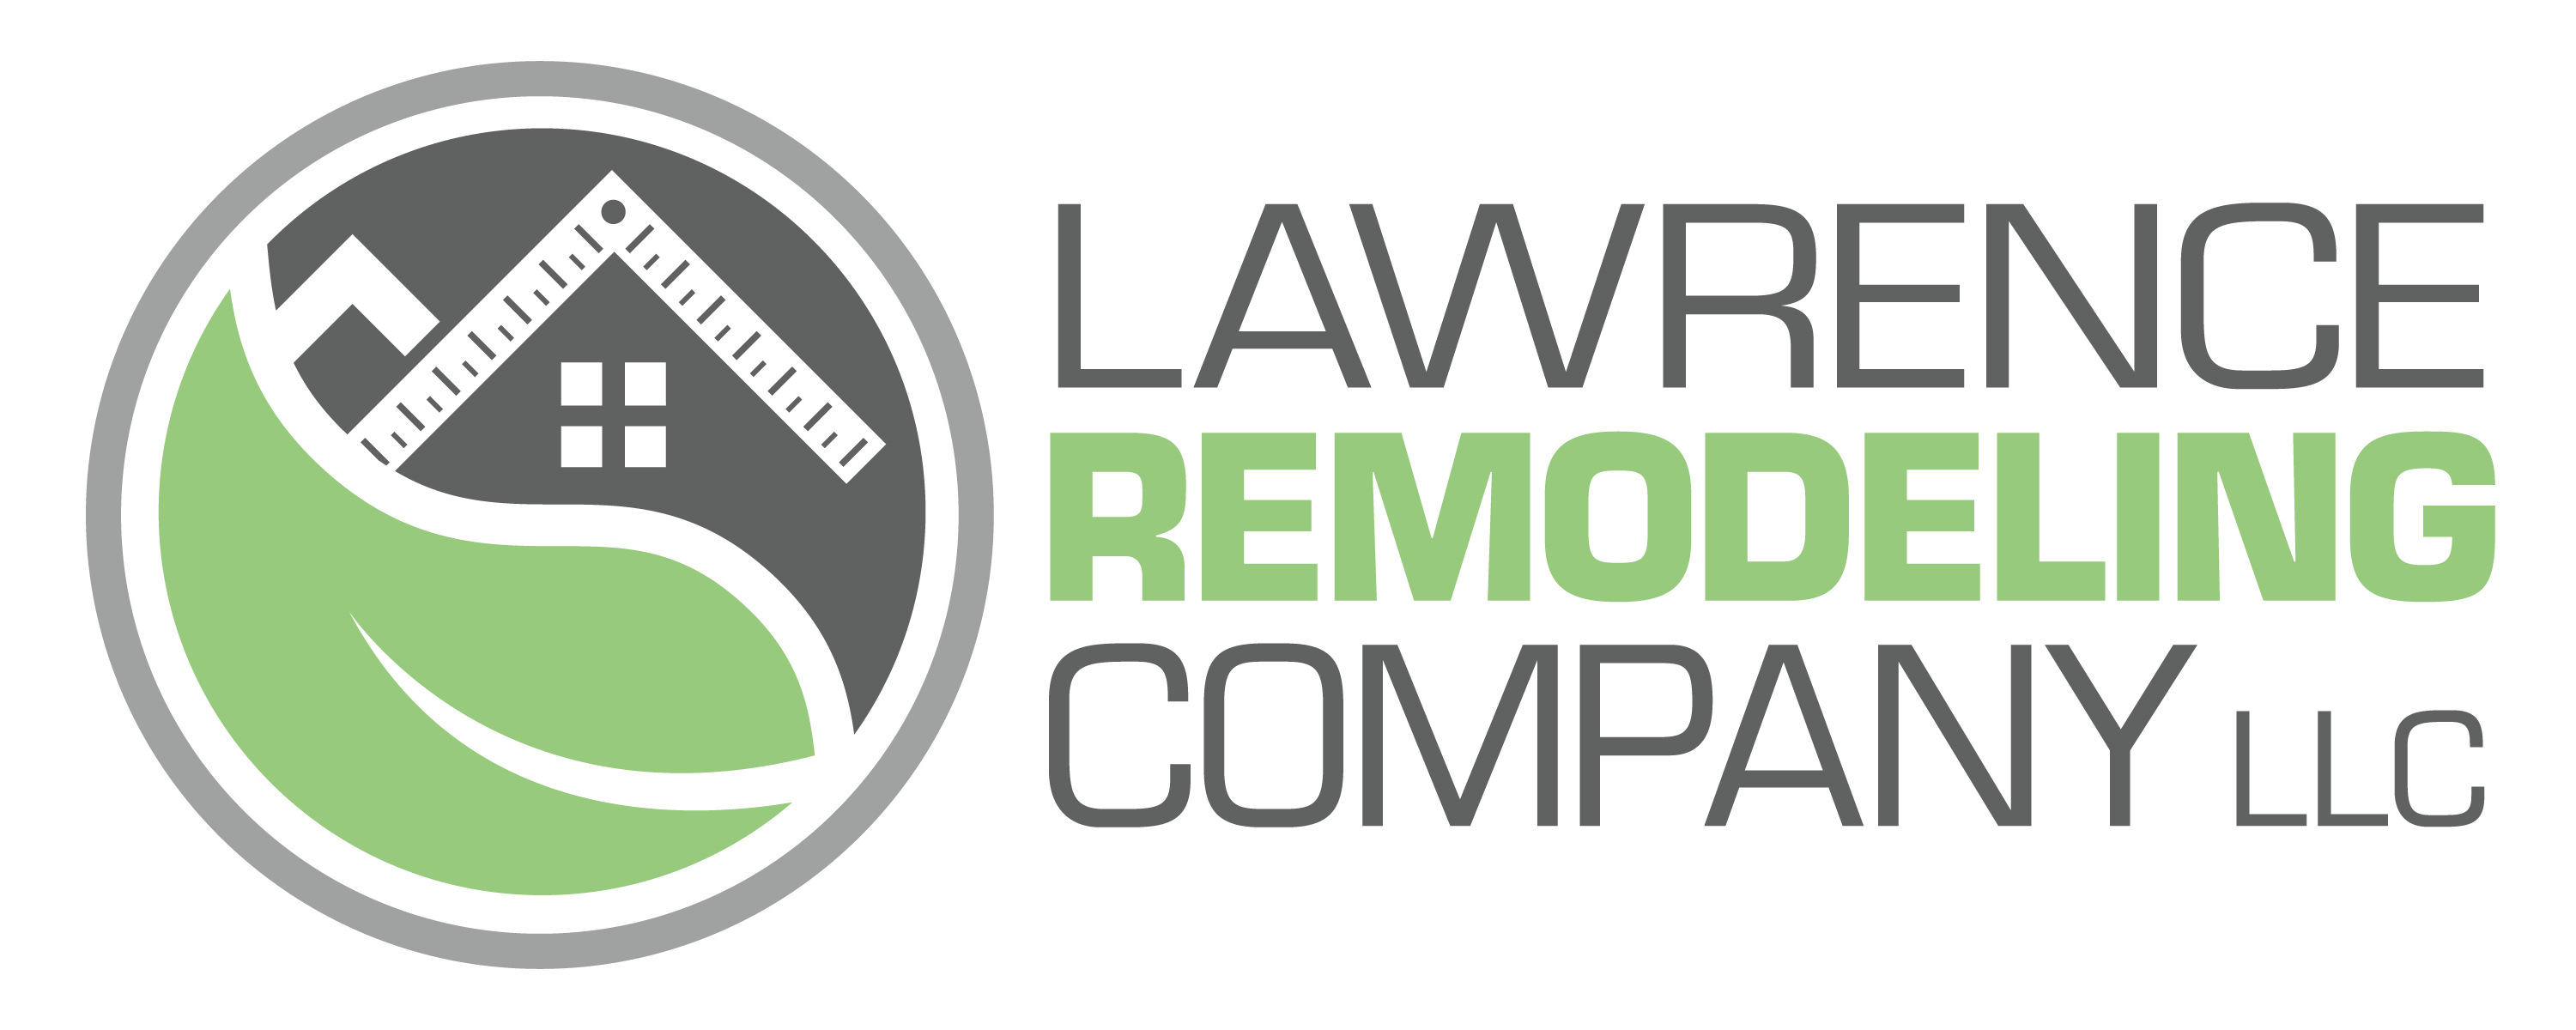 Lawrence Remodeling Company, LLC Logo